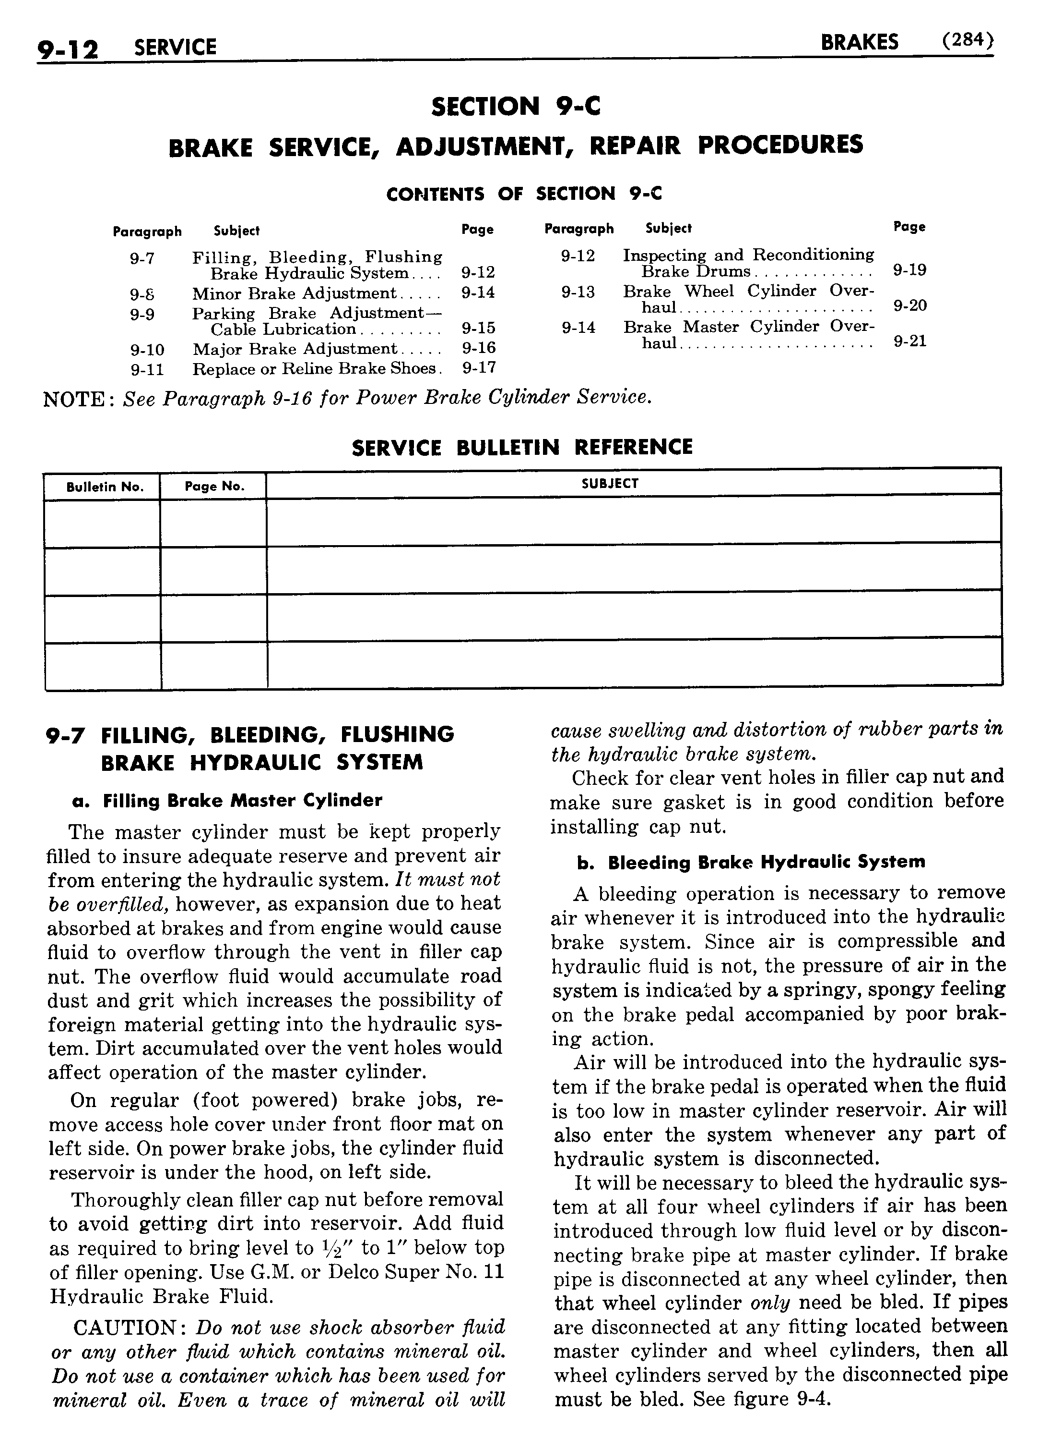 n_10 1955 Buick Shop Manual - Brakes-012-012.jpg